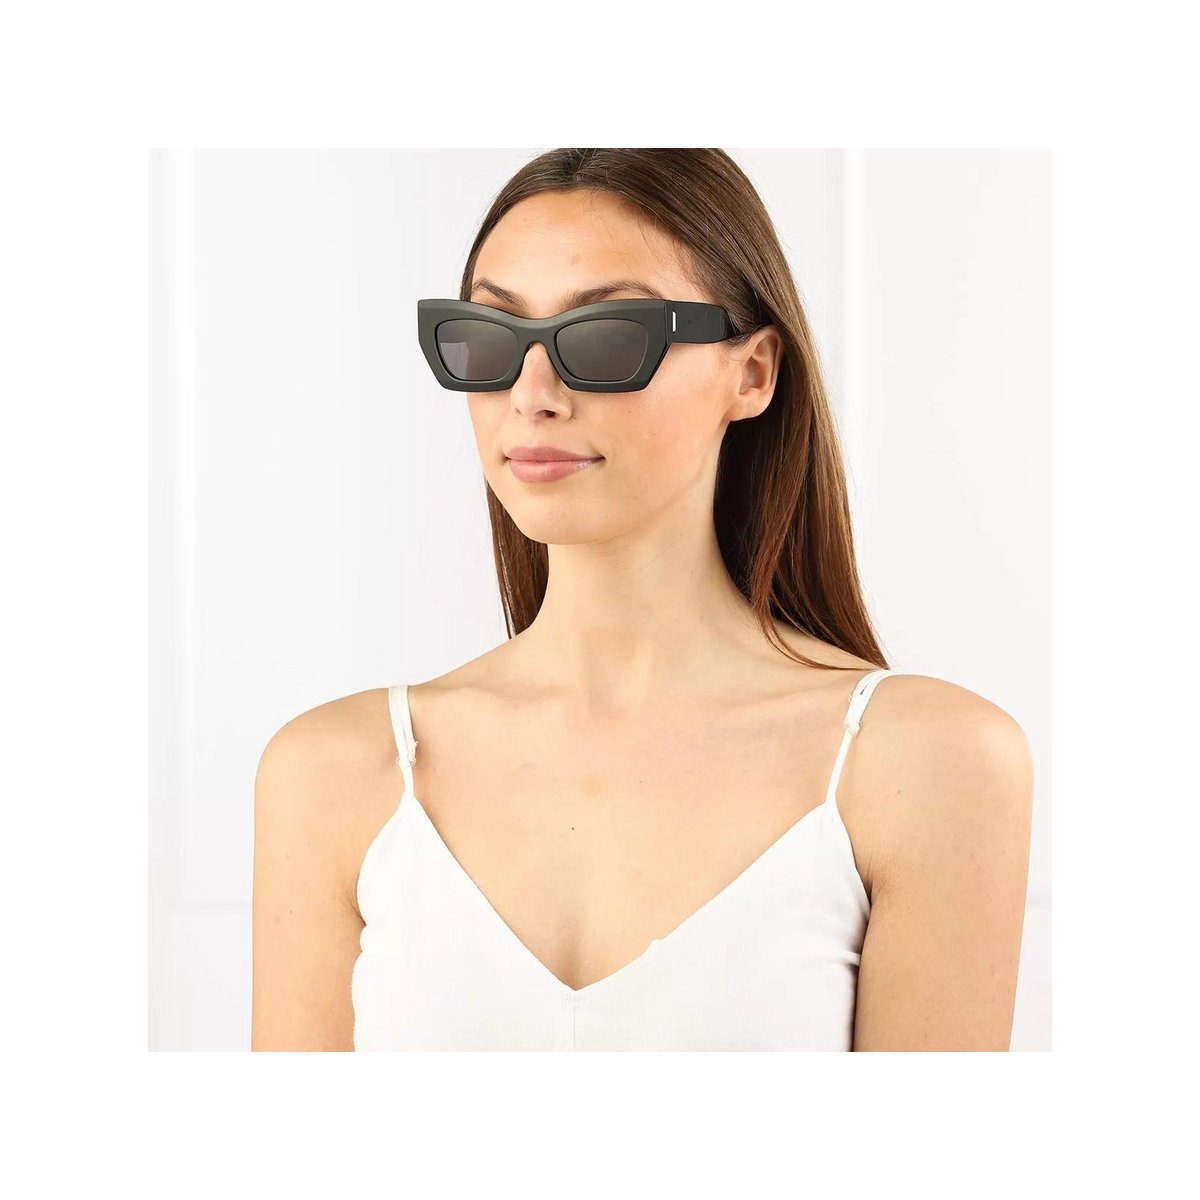 schwarz (1-St) Sonnenbrille BOSS